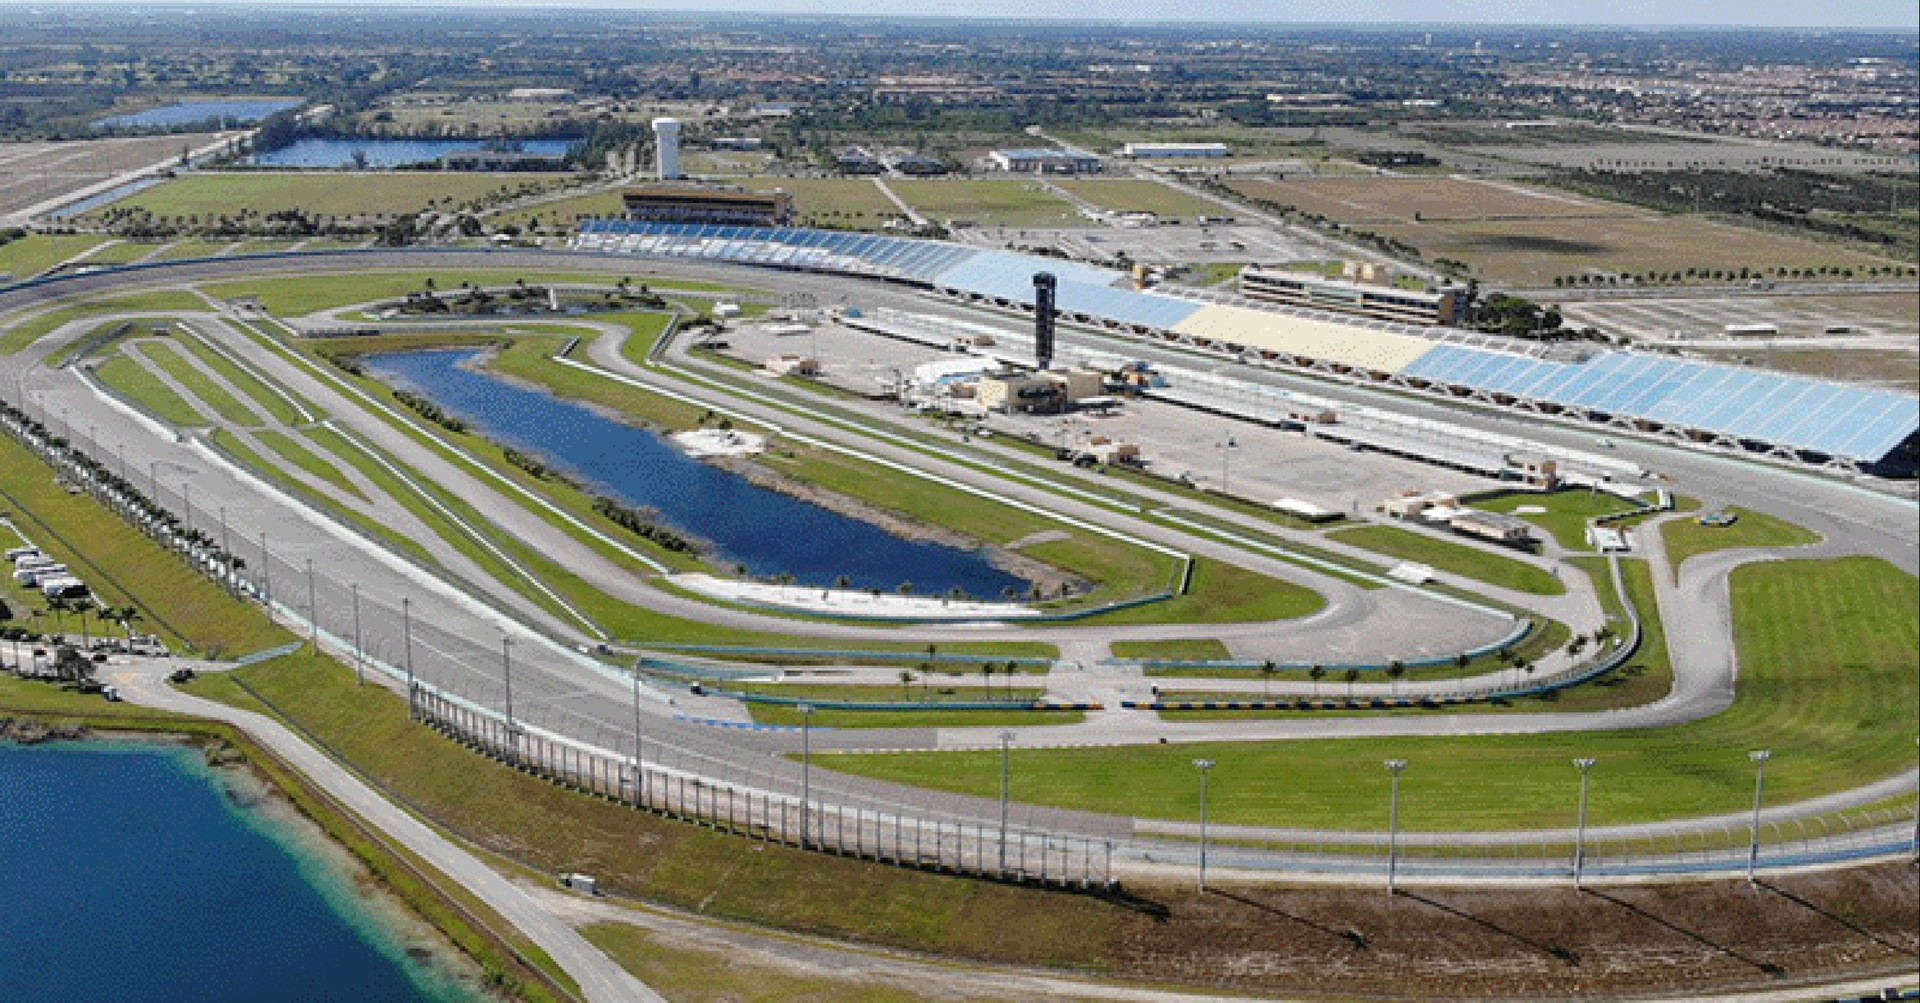 Homestead-Miami Speedway, in Homestead, Florida. Photo courtesy ASRA.